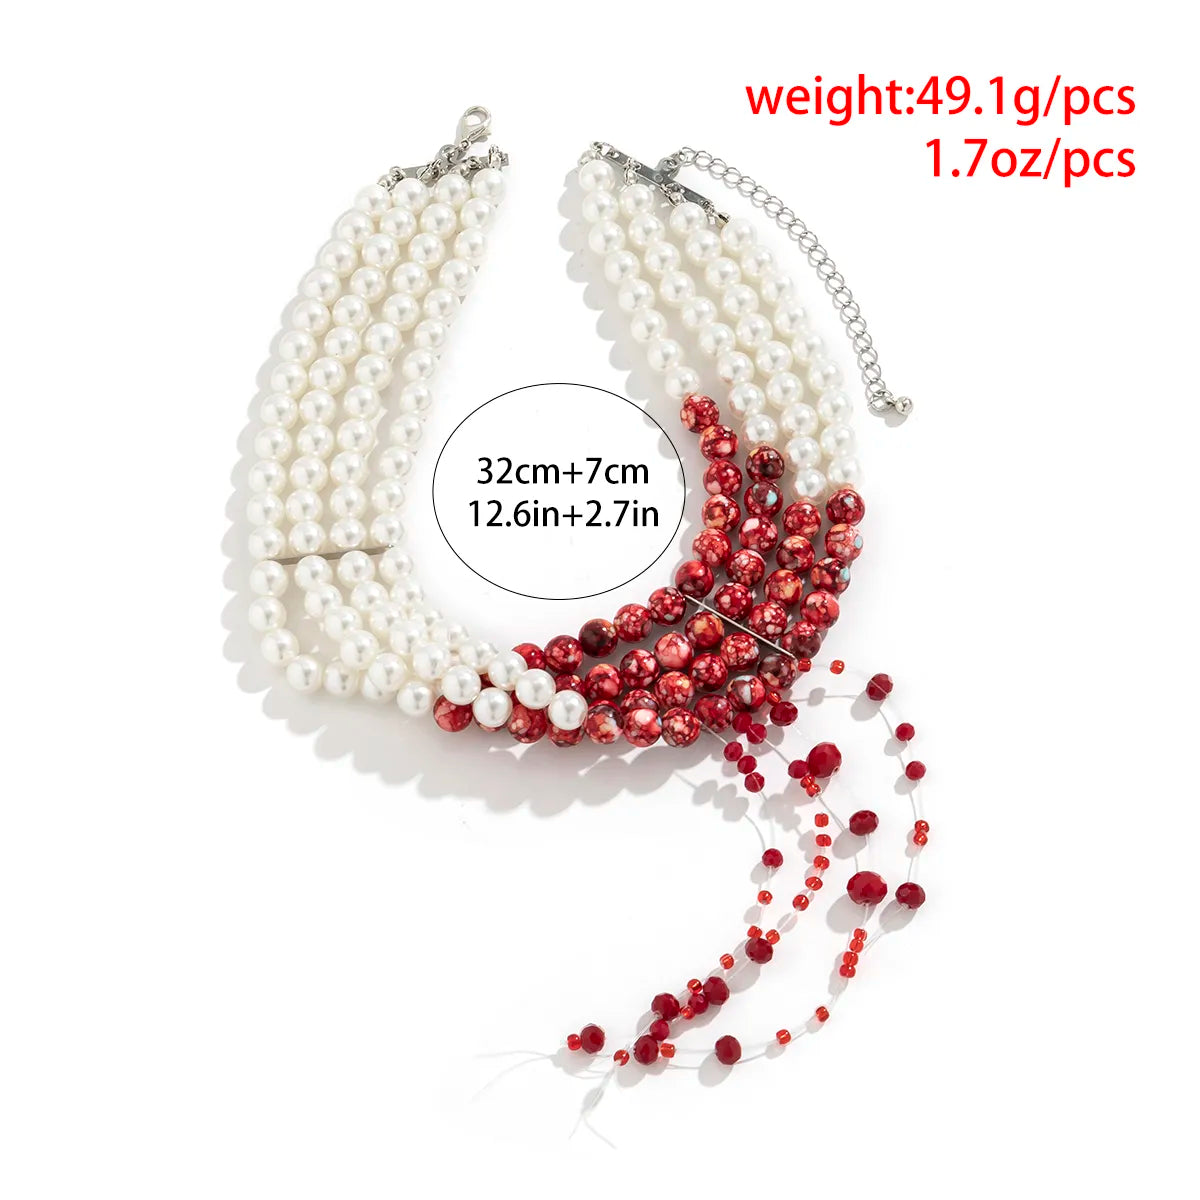 EFLAVOUR™ Cherry Red Beads Tassel